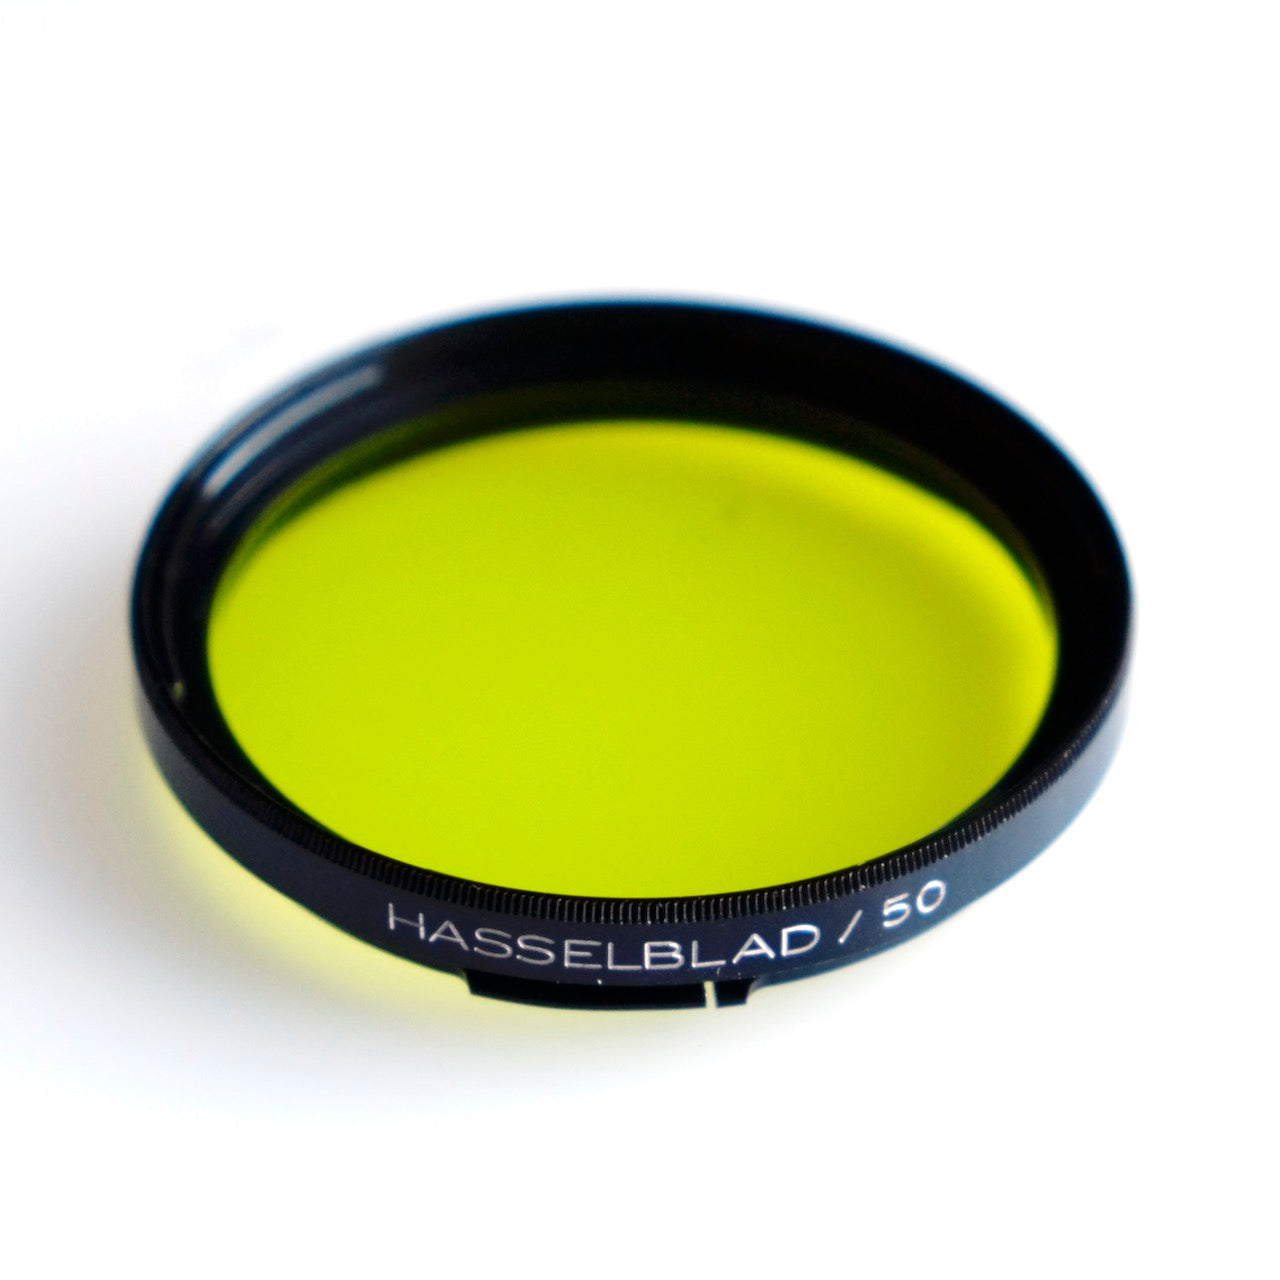 Hasselblad B50 Yellow Filter